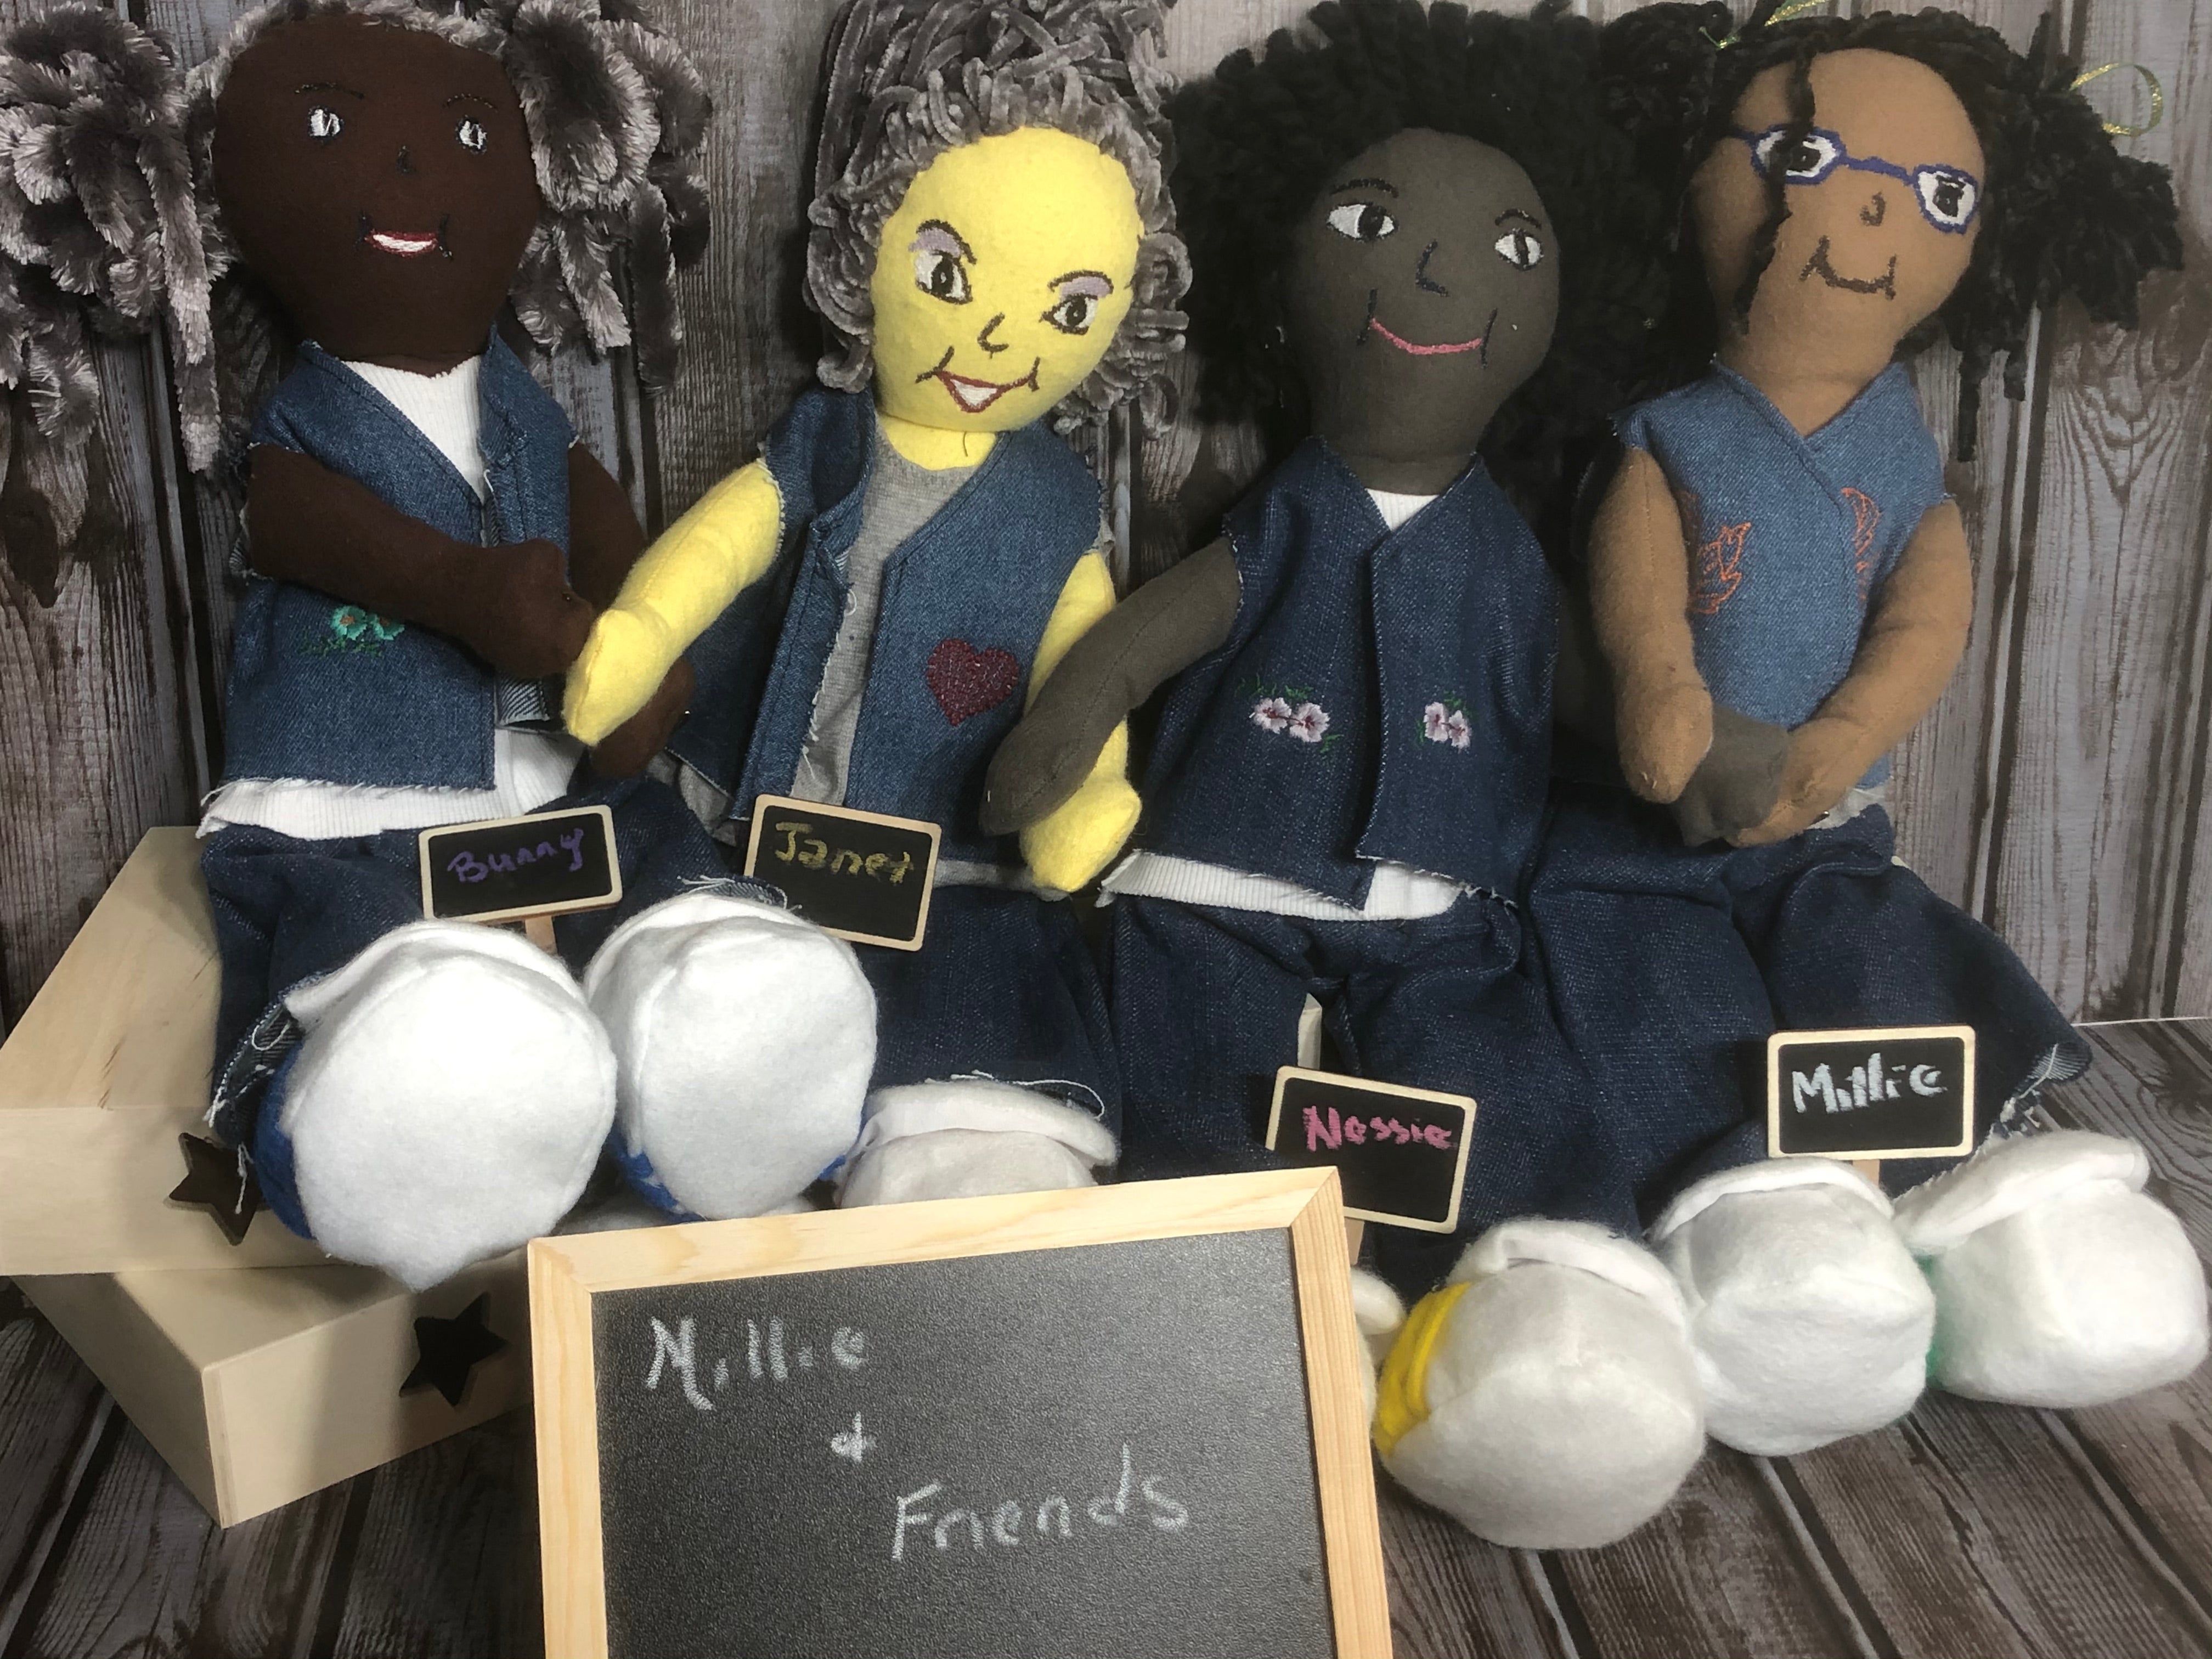 Messenger Bag – The Millie & Friends Shop